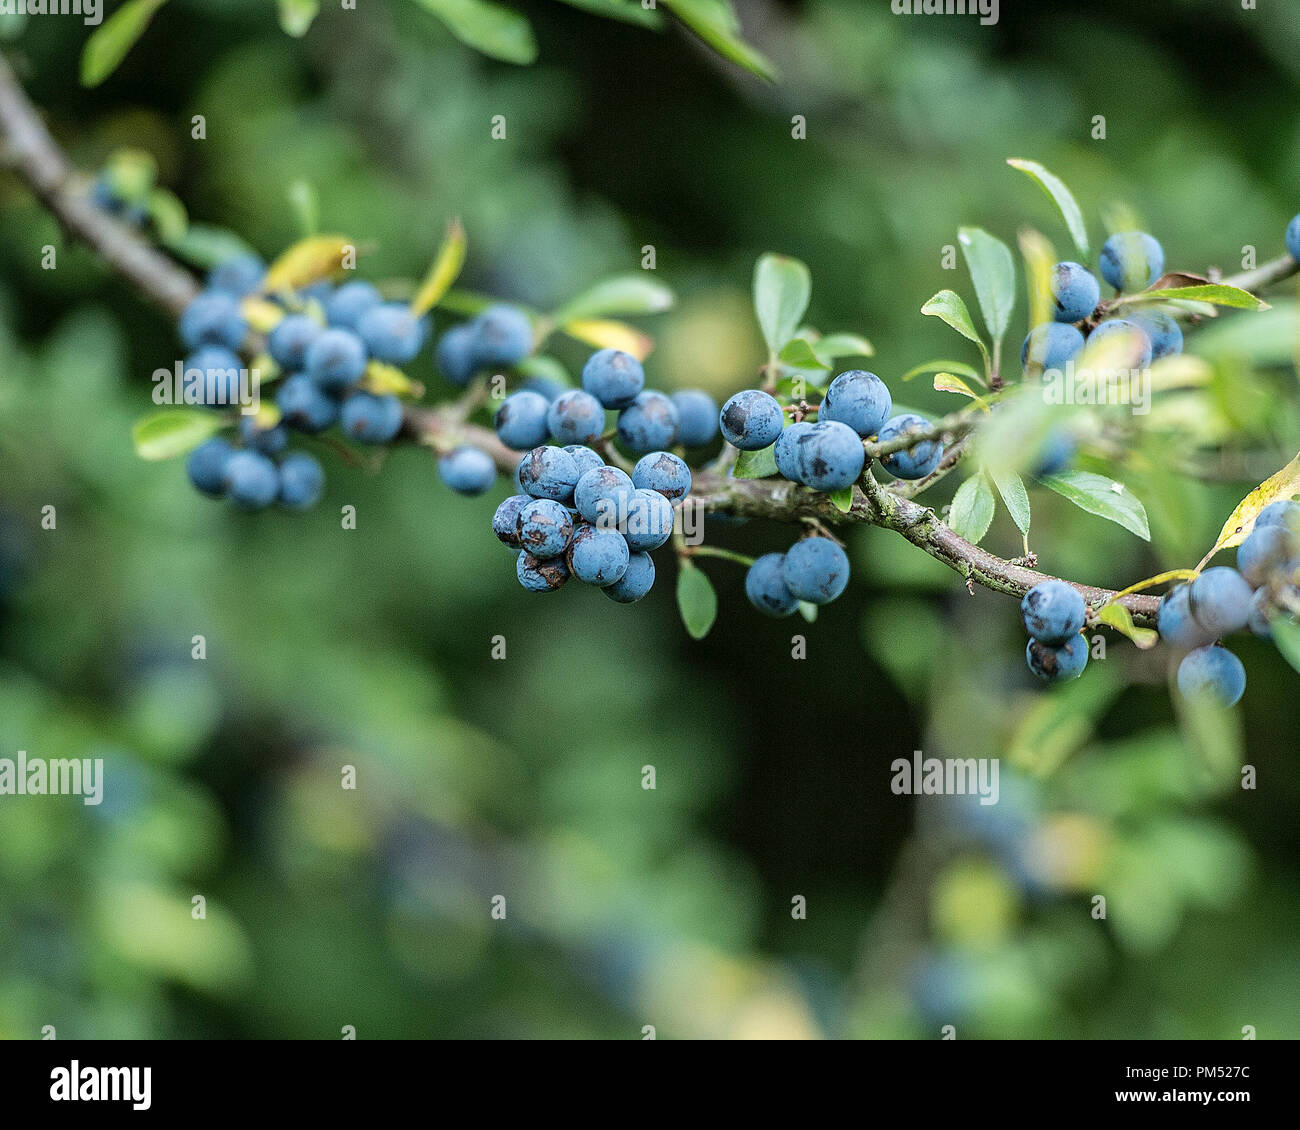 Prunus spinosa ,sloe berries Stock Photo